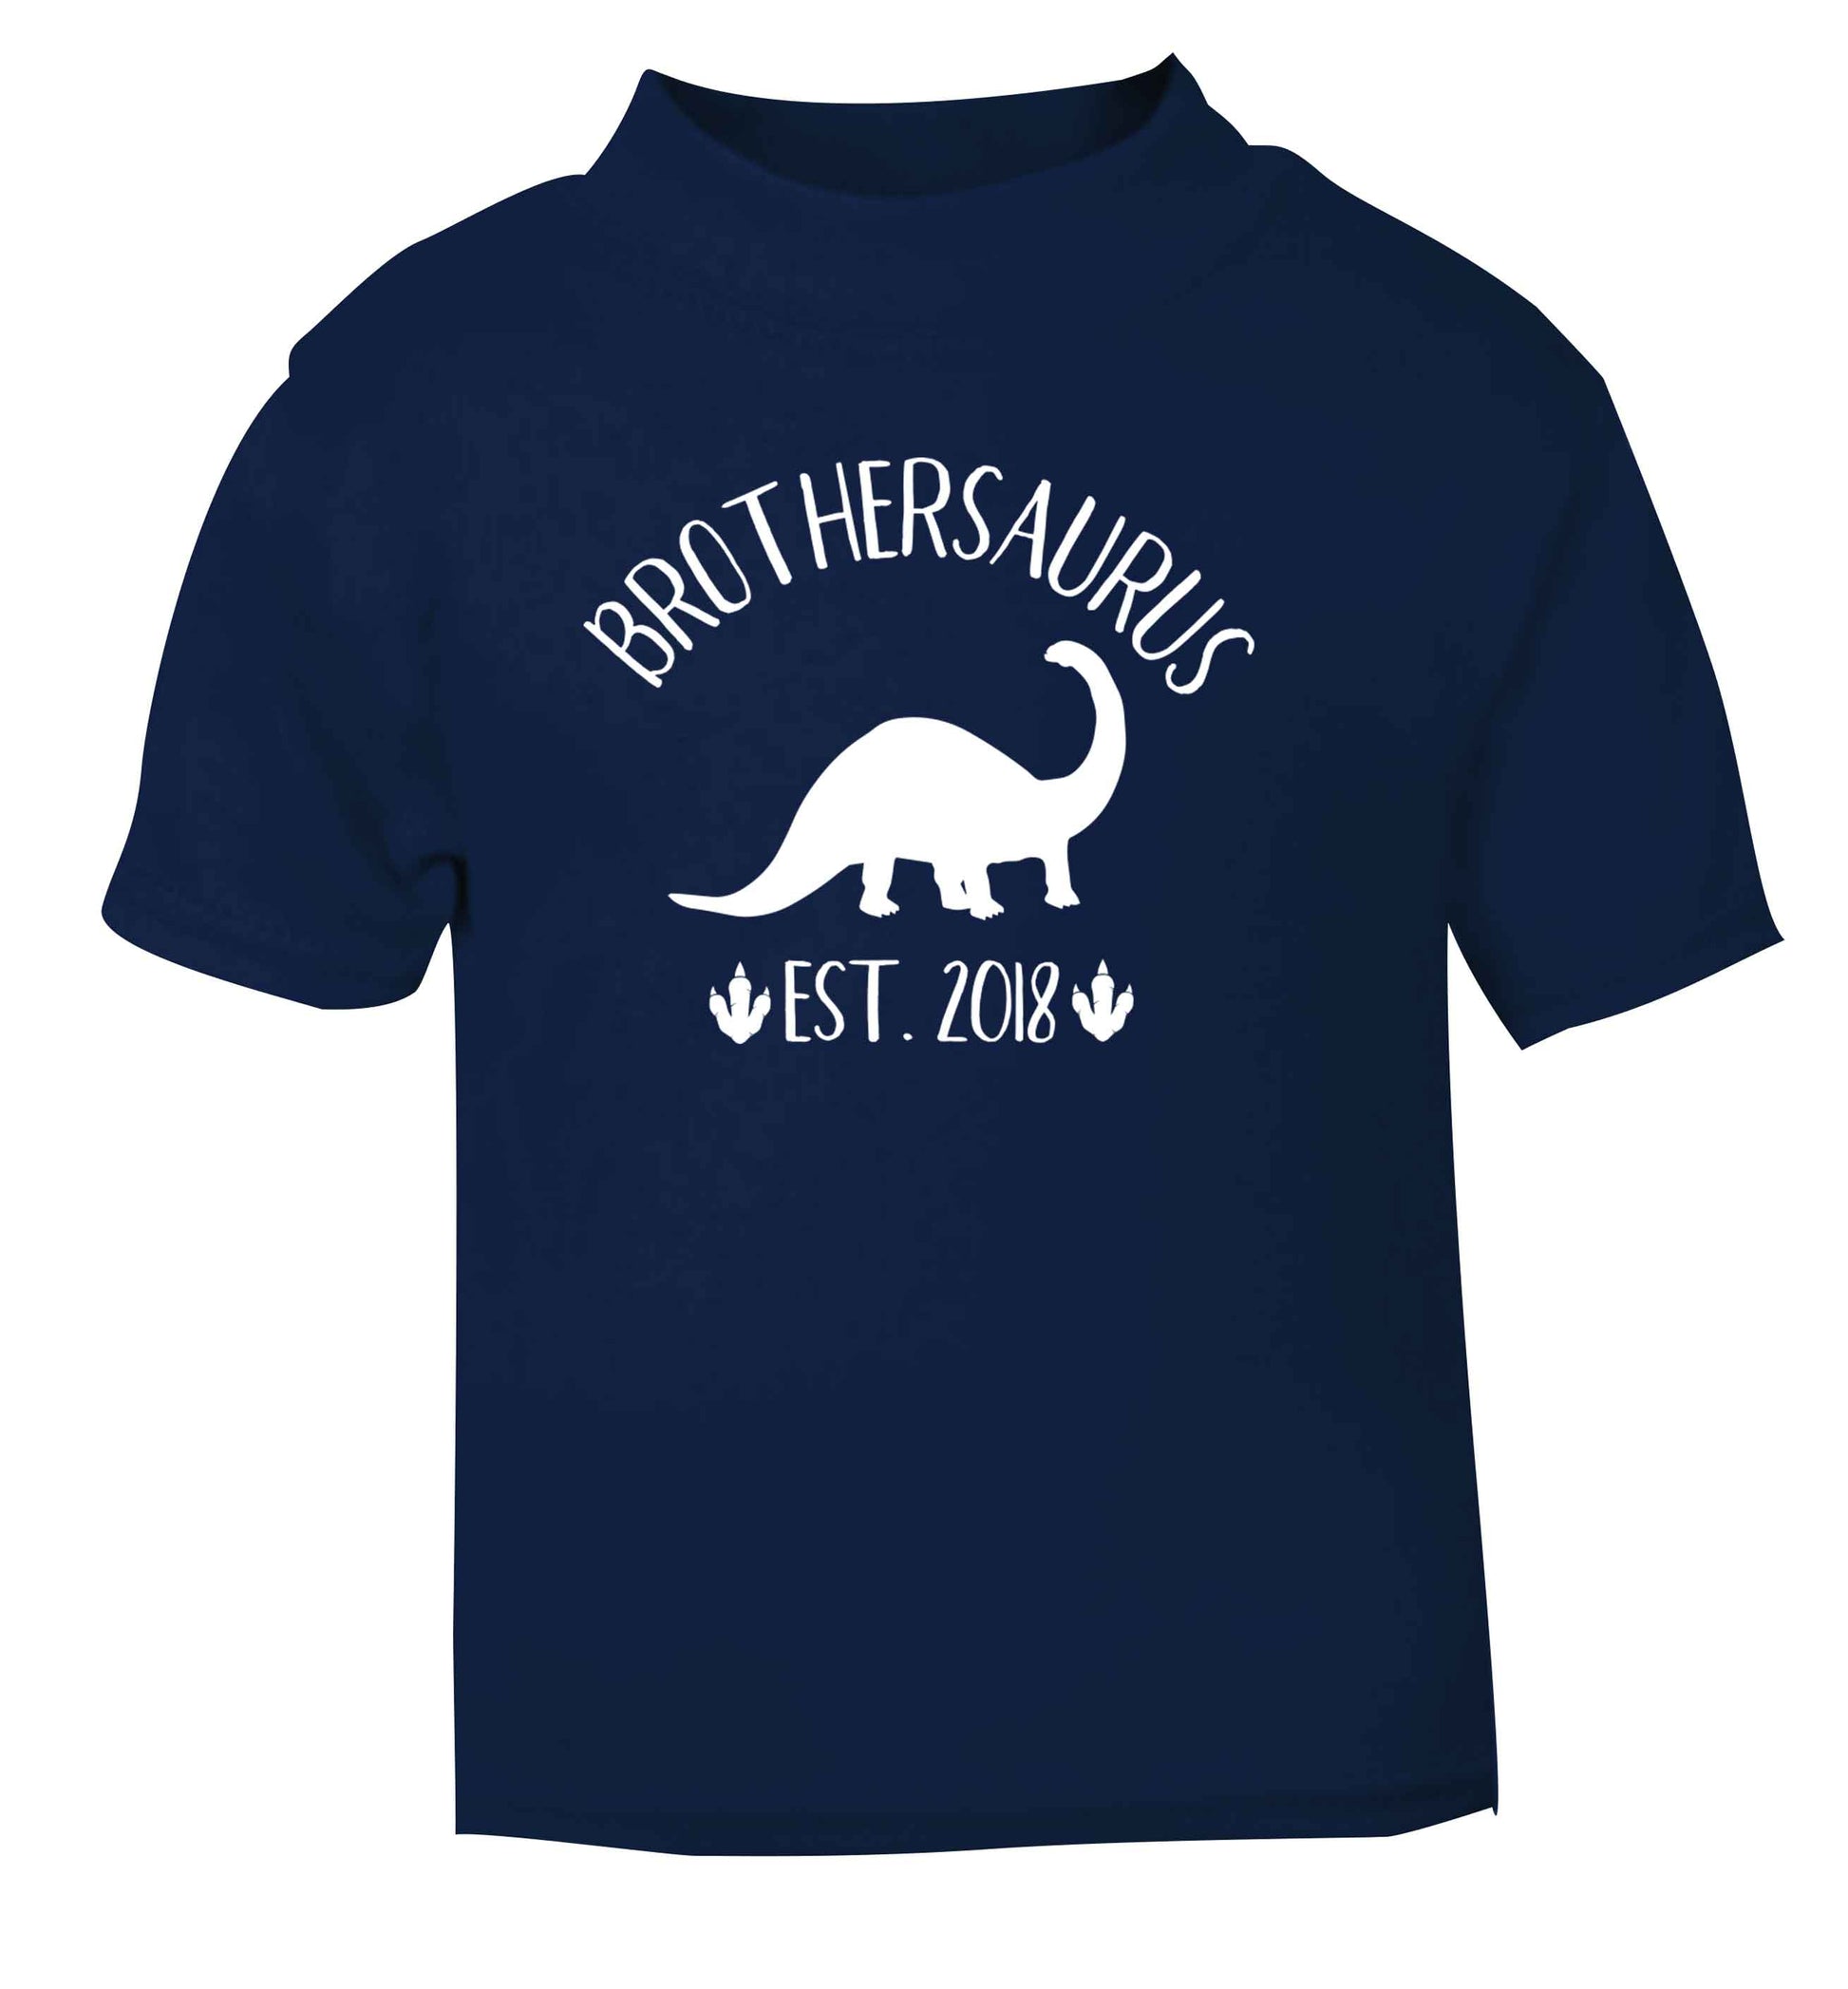 Personalised brothersaurus since (custom date) navy Baby Toddler Tshirt 2 Years